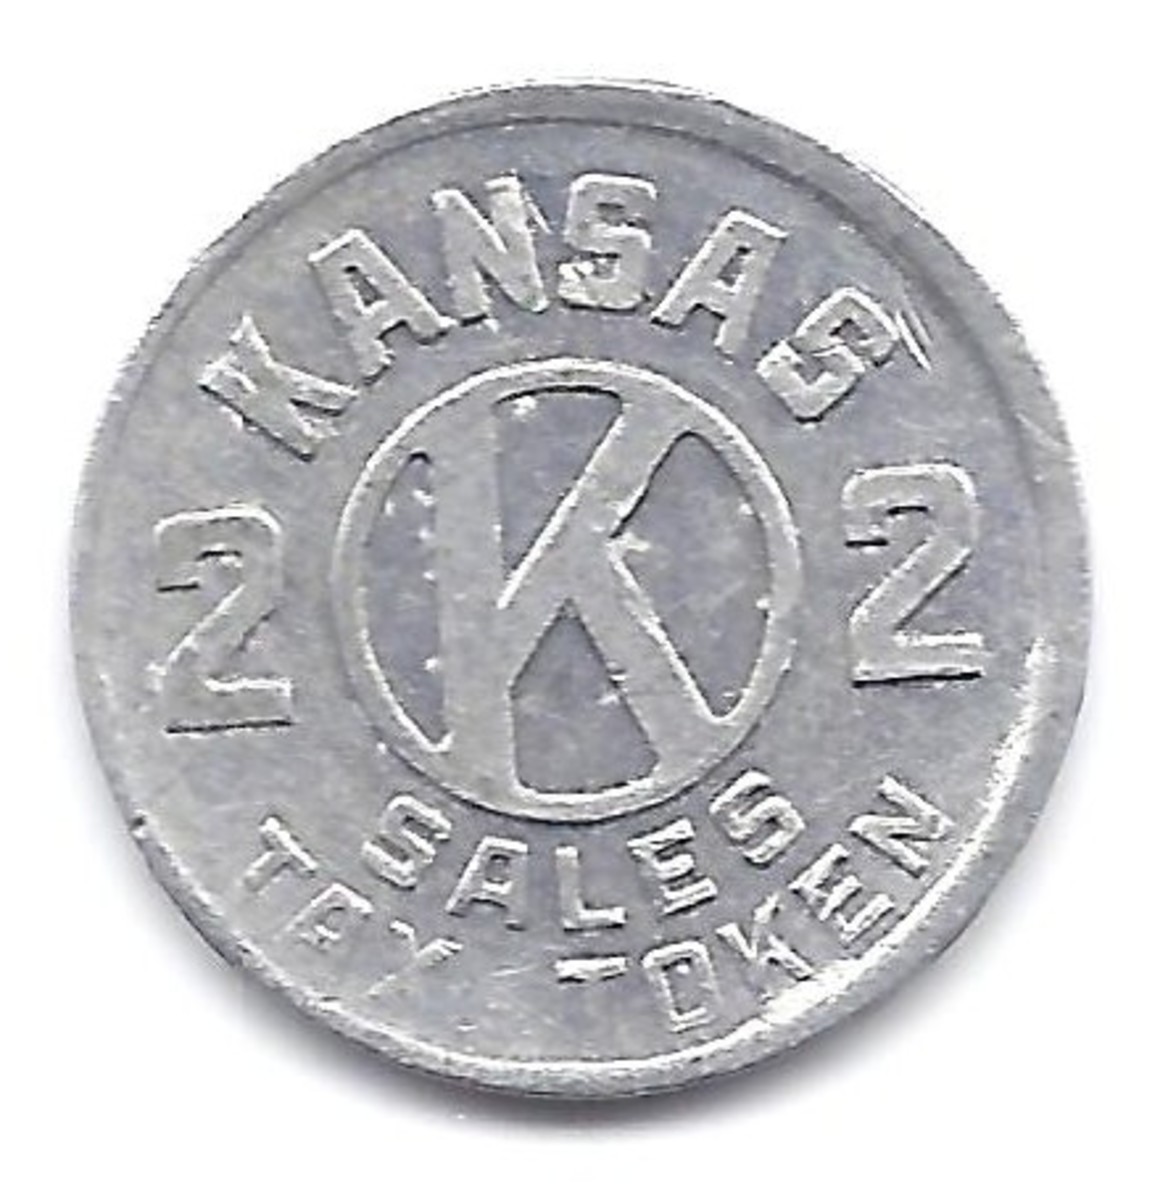 KS-S1 and KS-S2 Kansas two mill sales tax tokens.